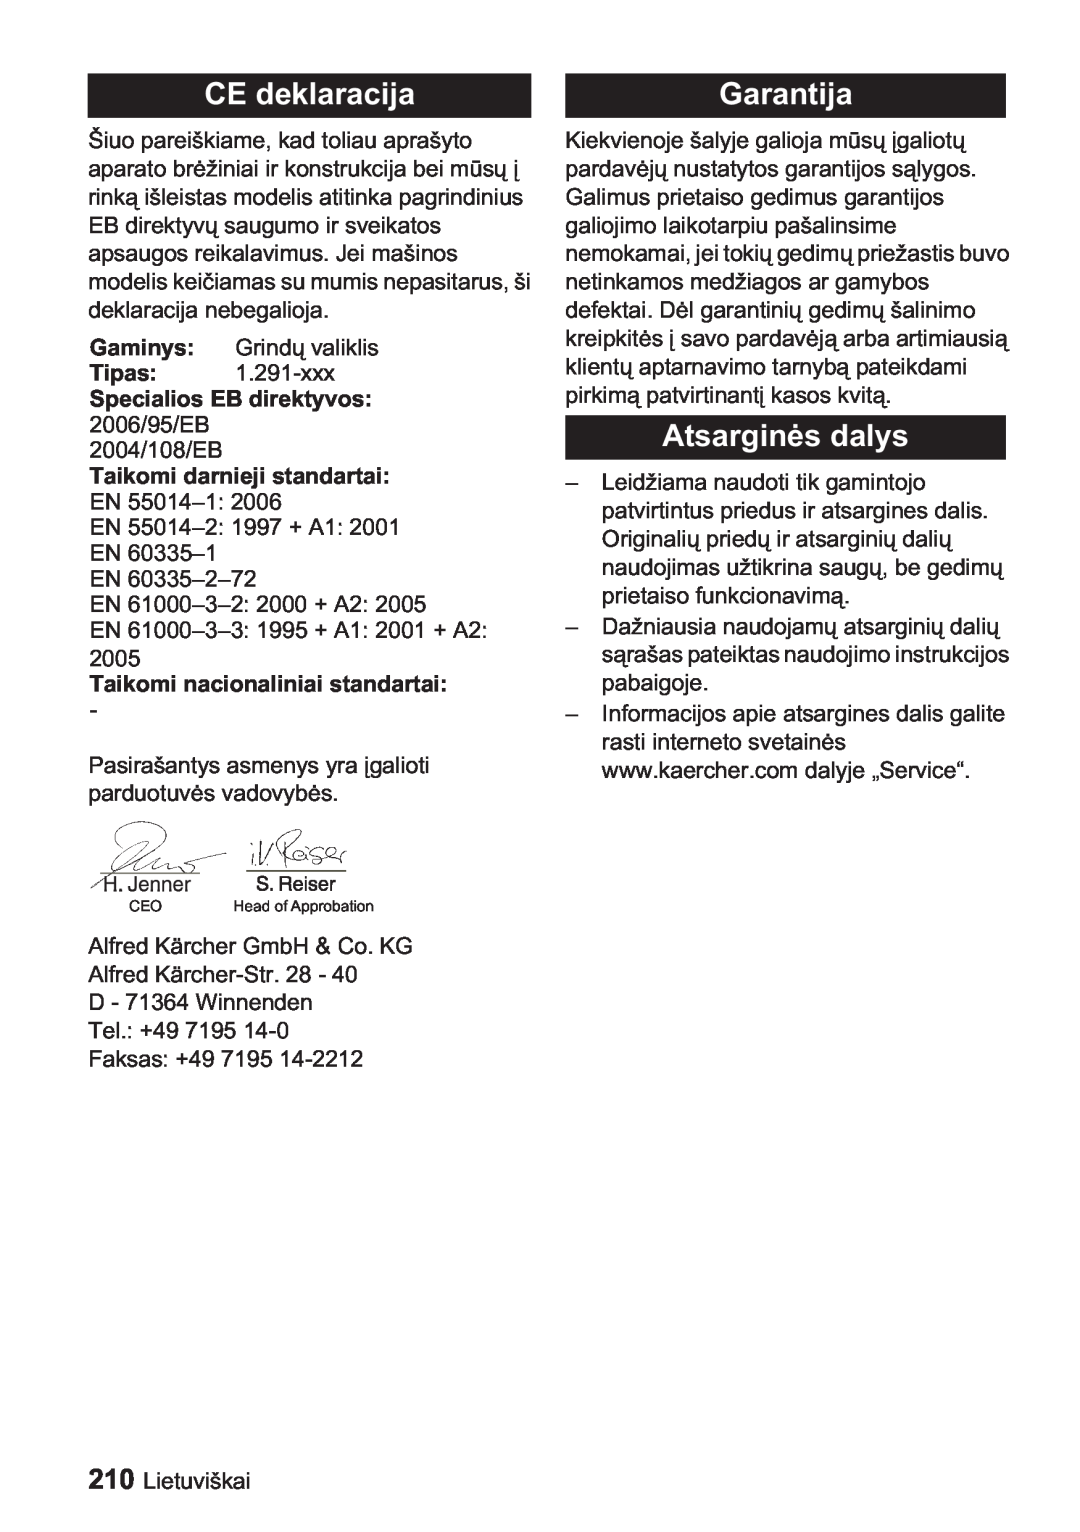 Karcher BDP 1500, BDP 50 manual CE deklaracija, Atsargin, Specialios EB direktyvos 2006/95/EB 2004/108/EB, Garantija 